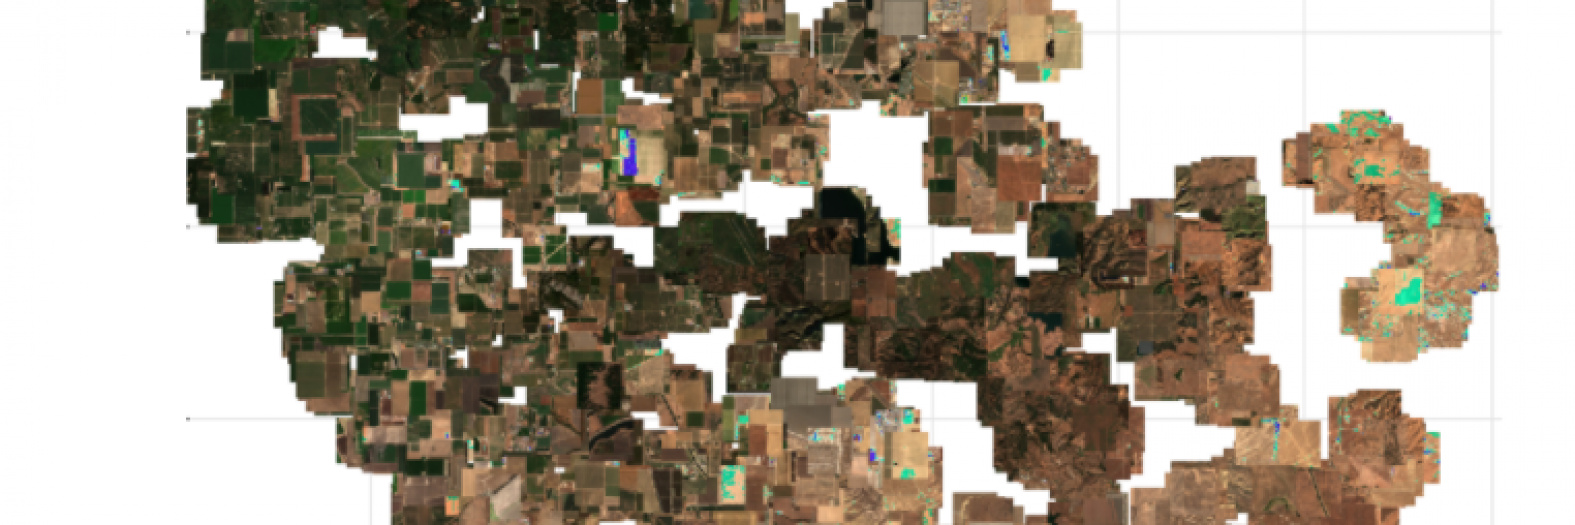 Labelling Satellite images